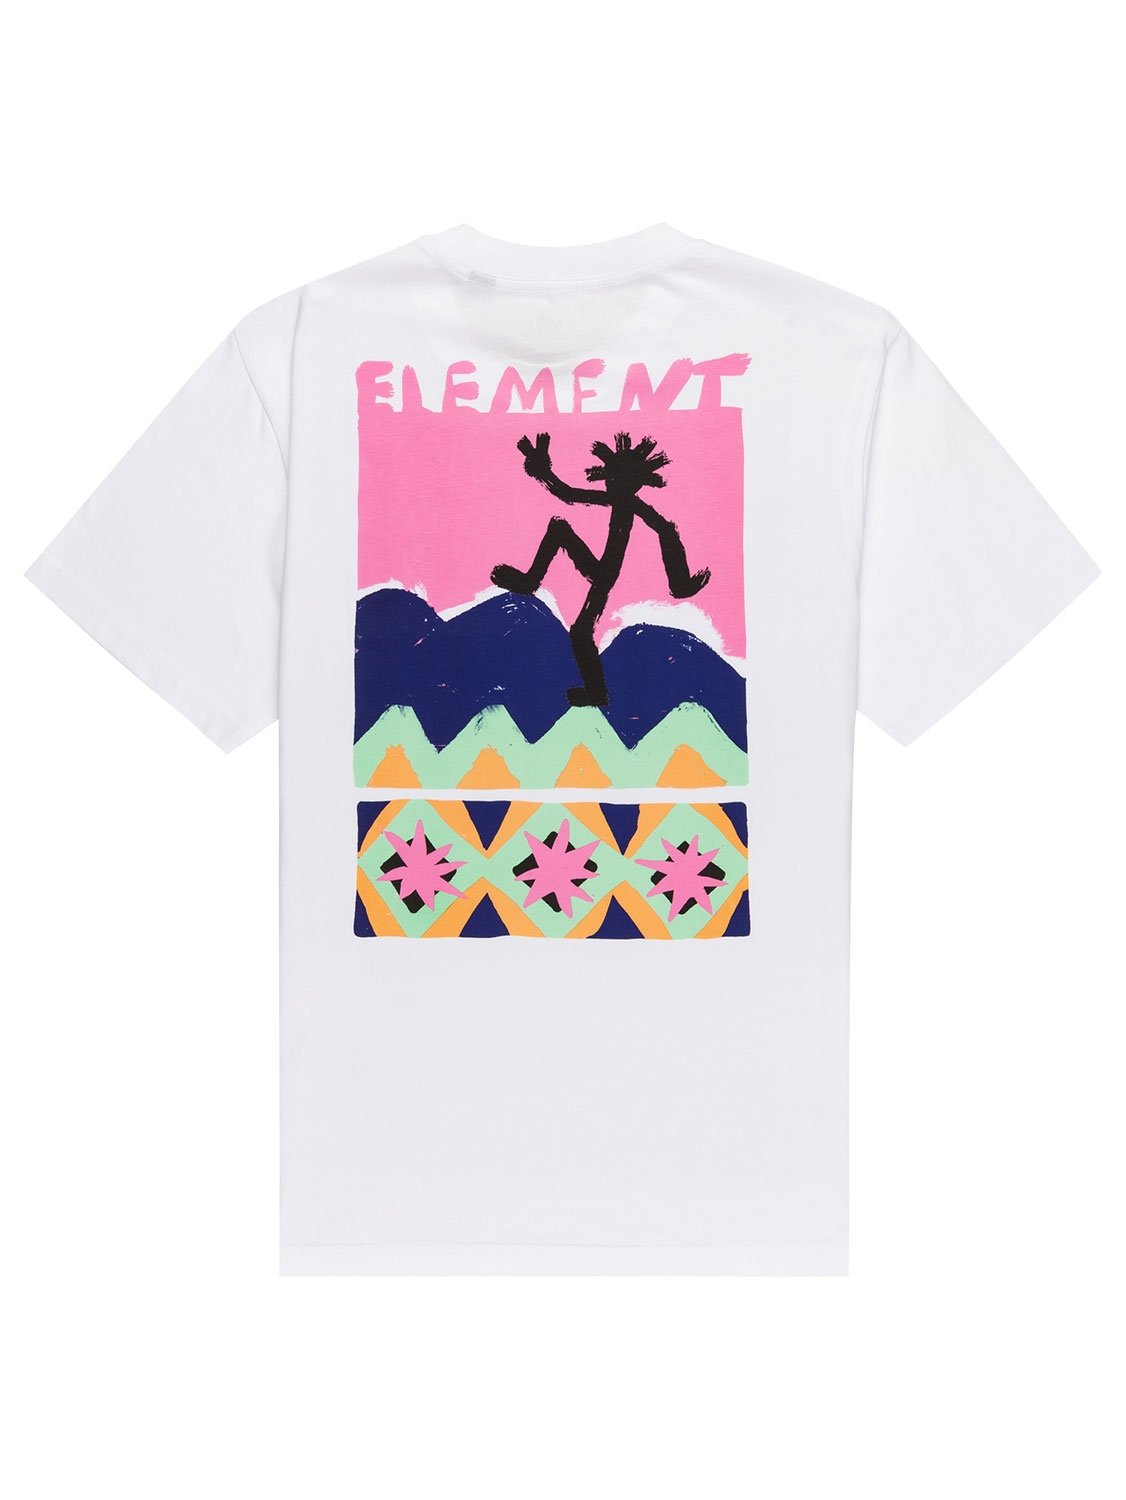 Element Men's Conquer T-Shirt